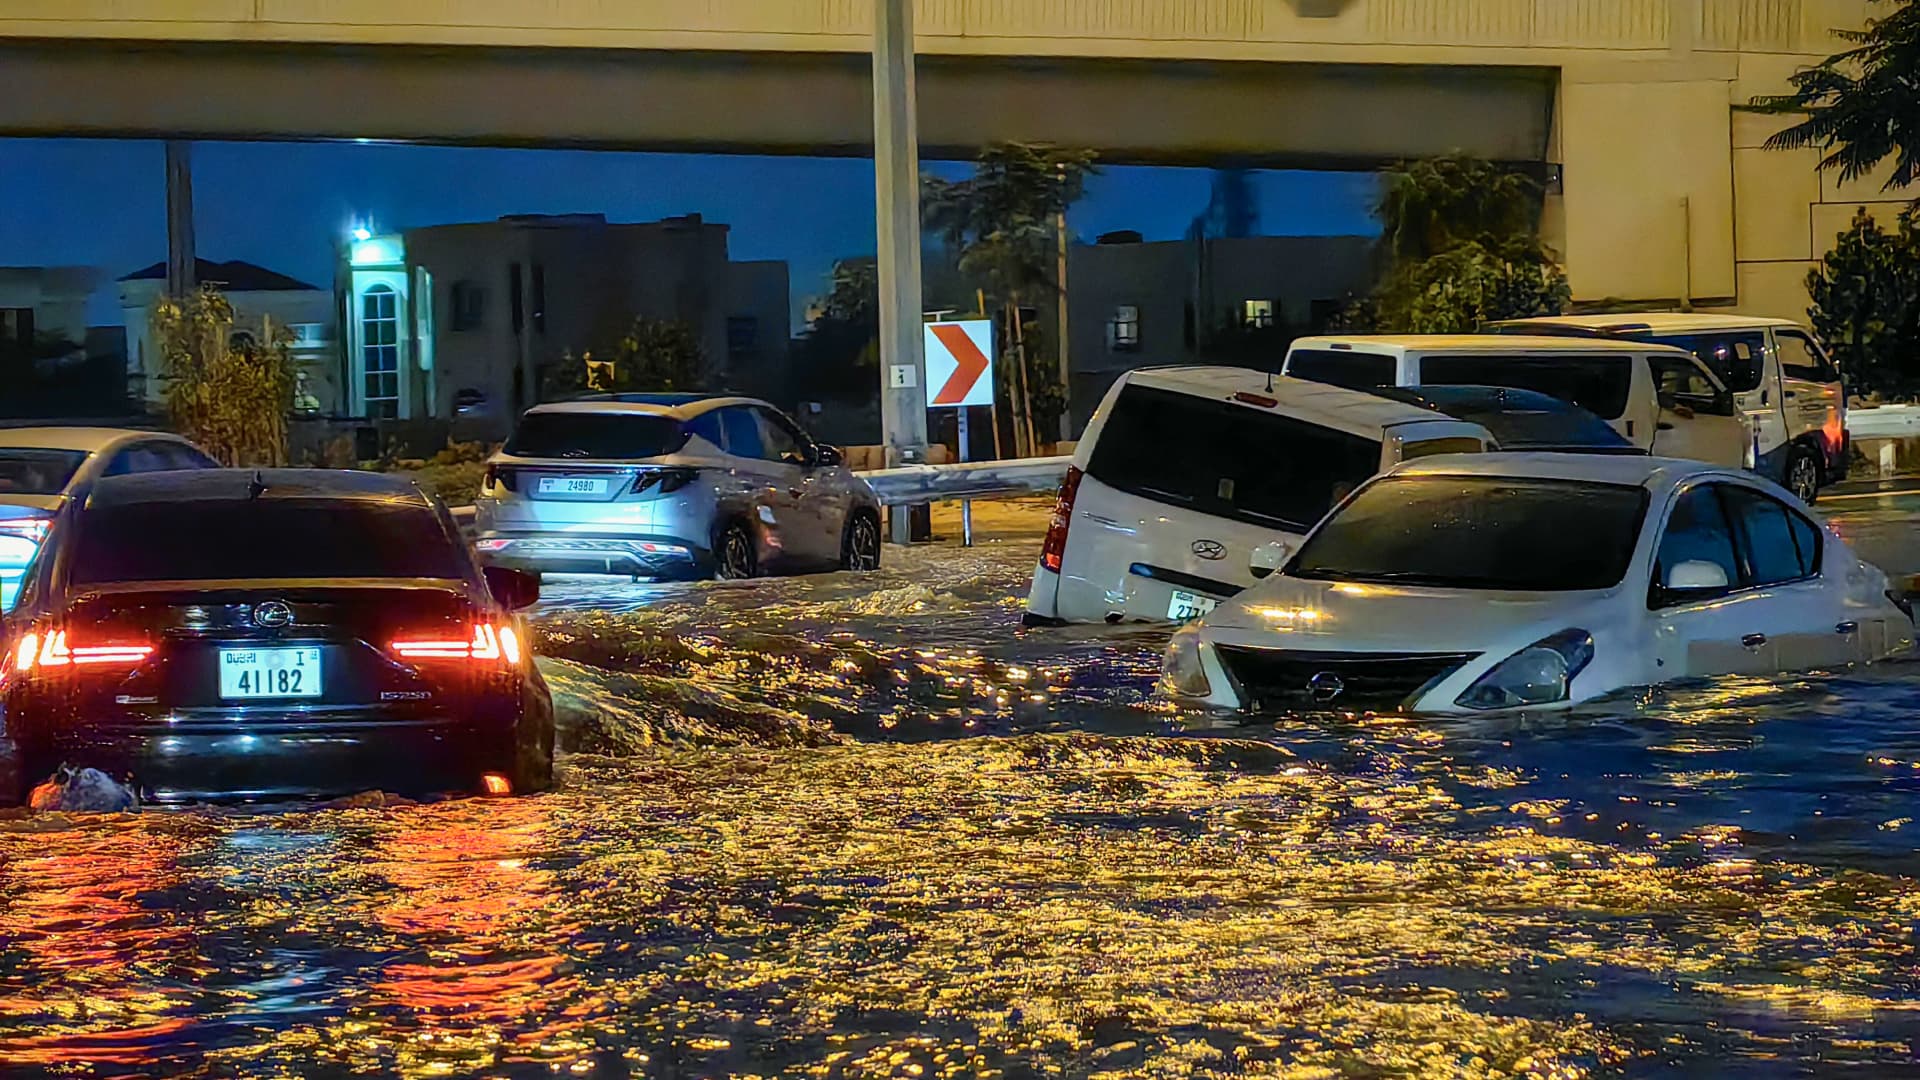 Dubai Damac property boss says floods were overexaggerated [Video]